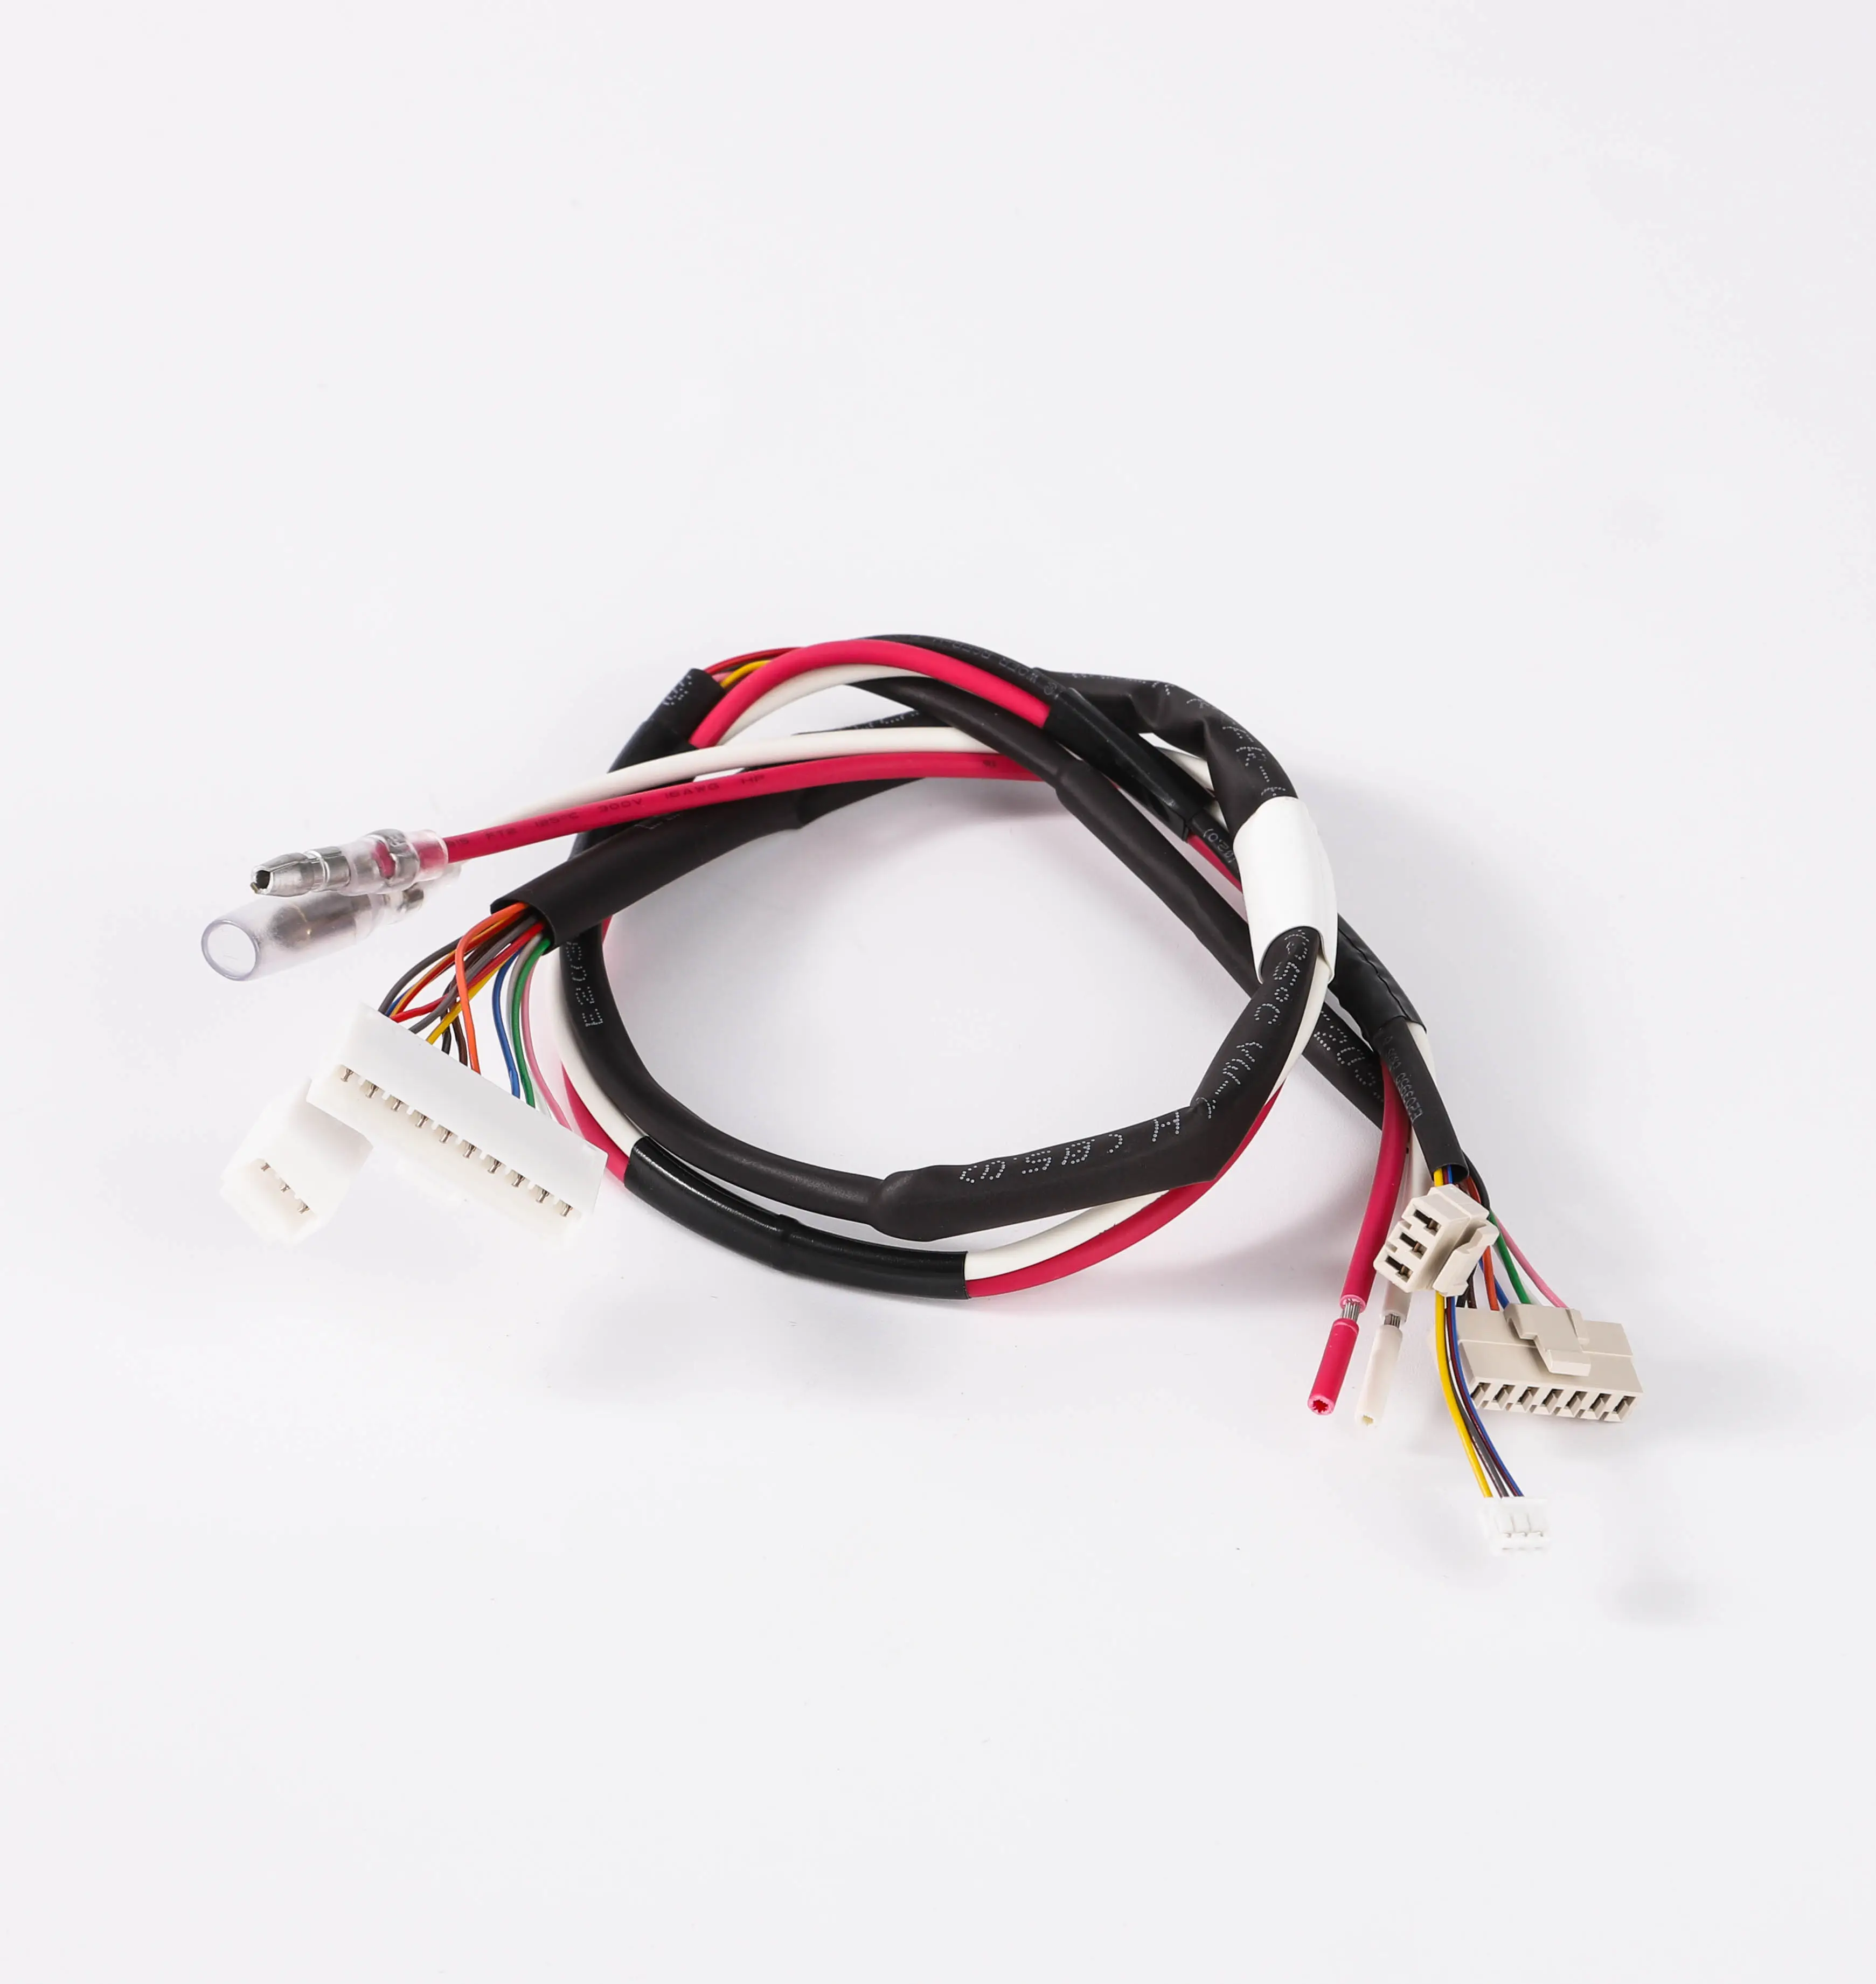 Auto wire harness automobile connector automotive wiring harness car power auto wiring harness automotive connectors